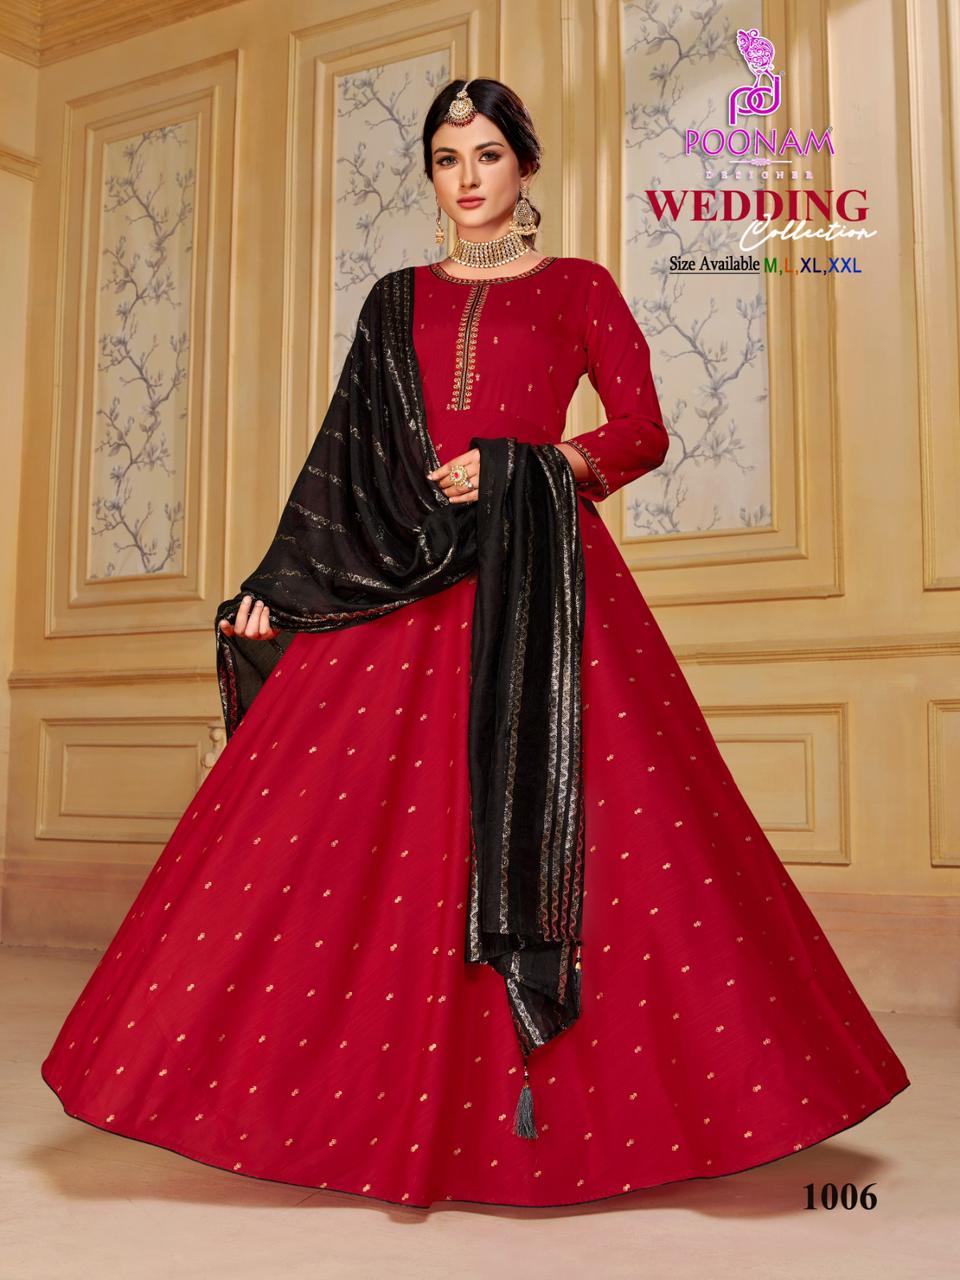 Poonam Designer Wedding Collection 1006